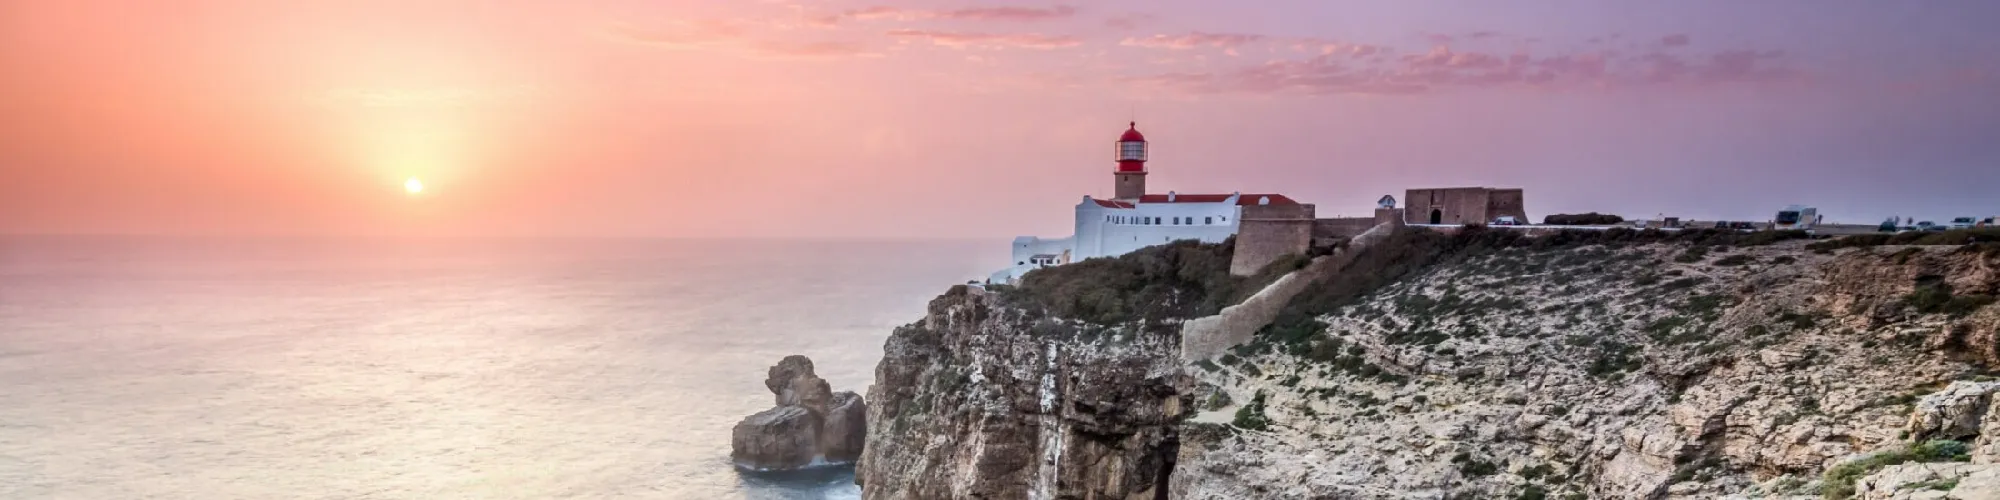 Urlaub in Portugal background image